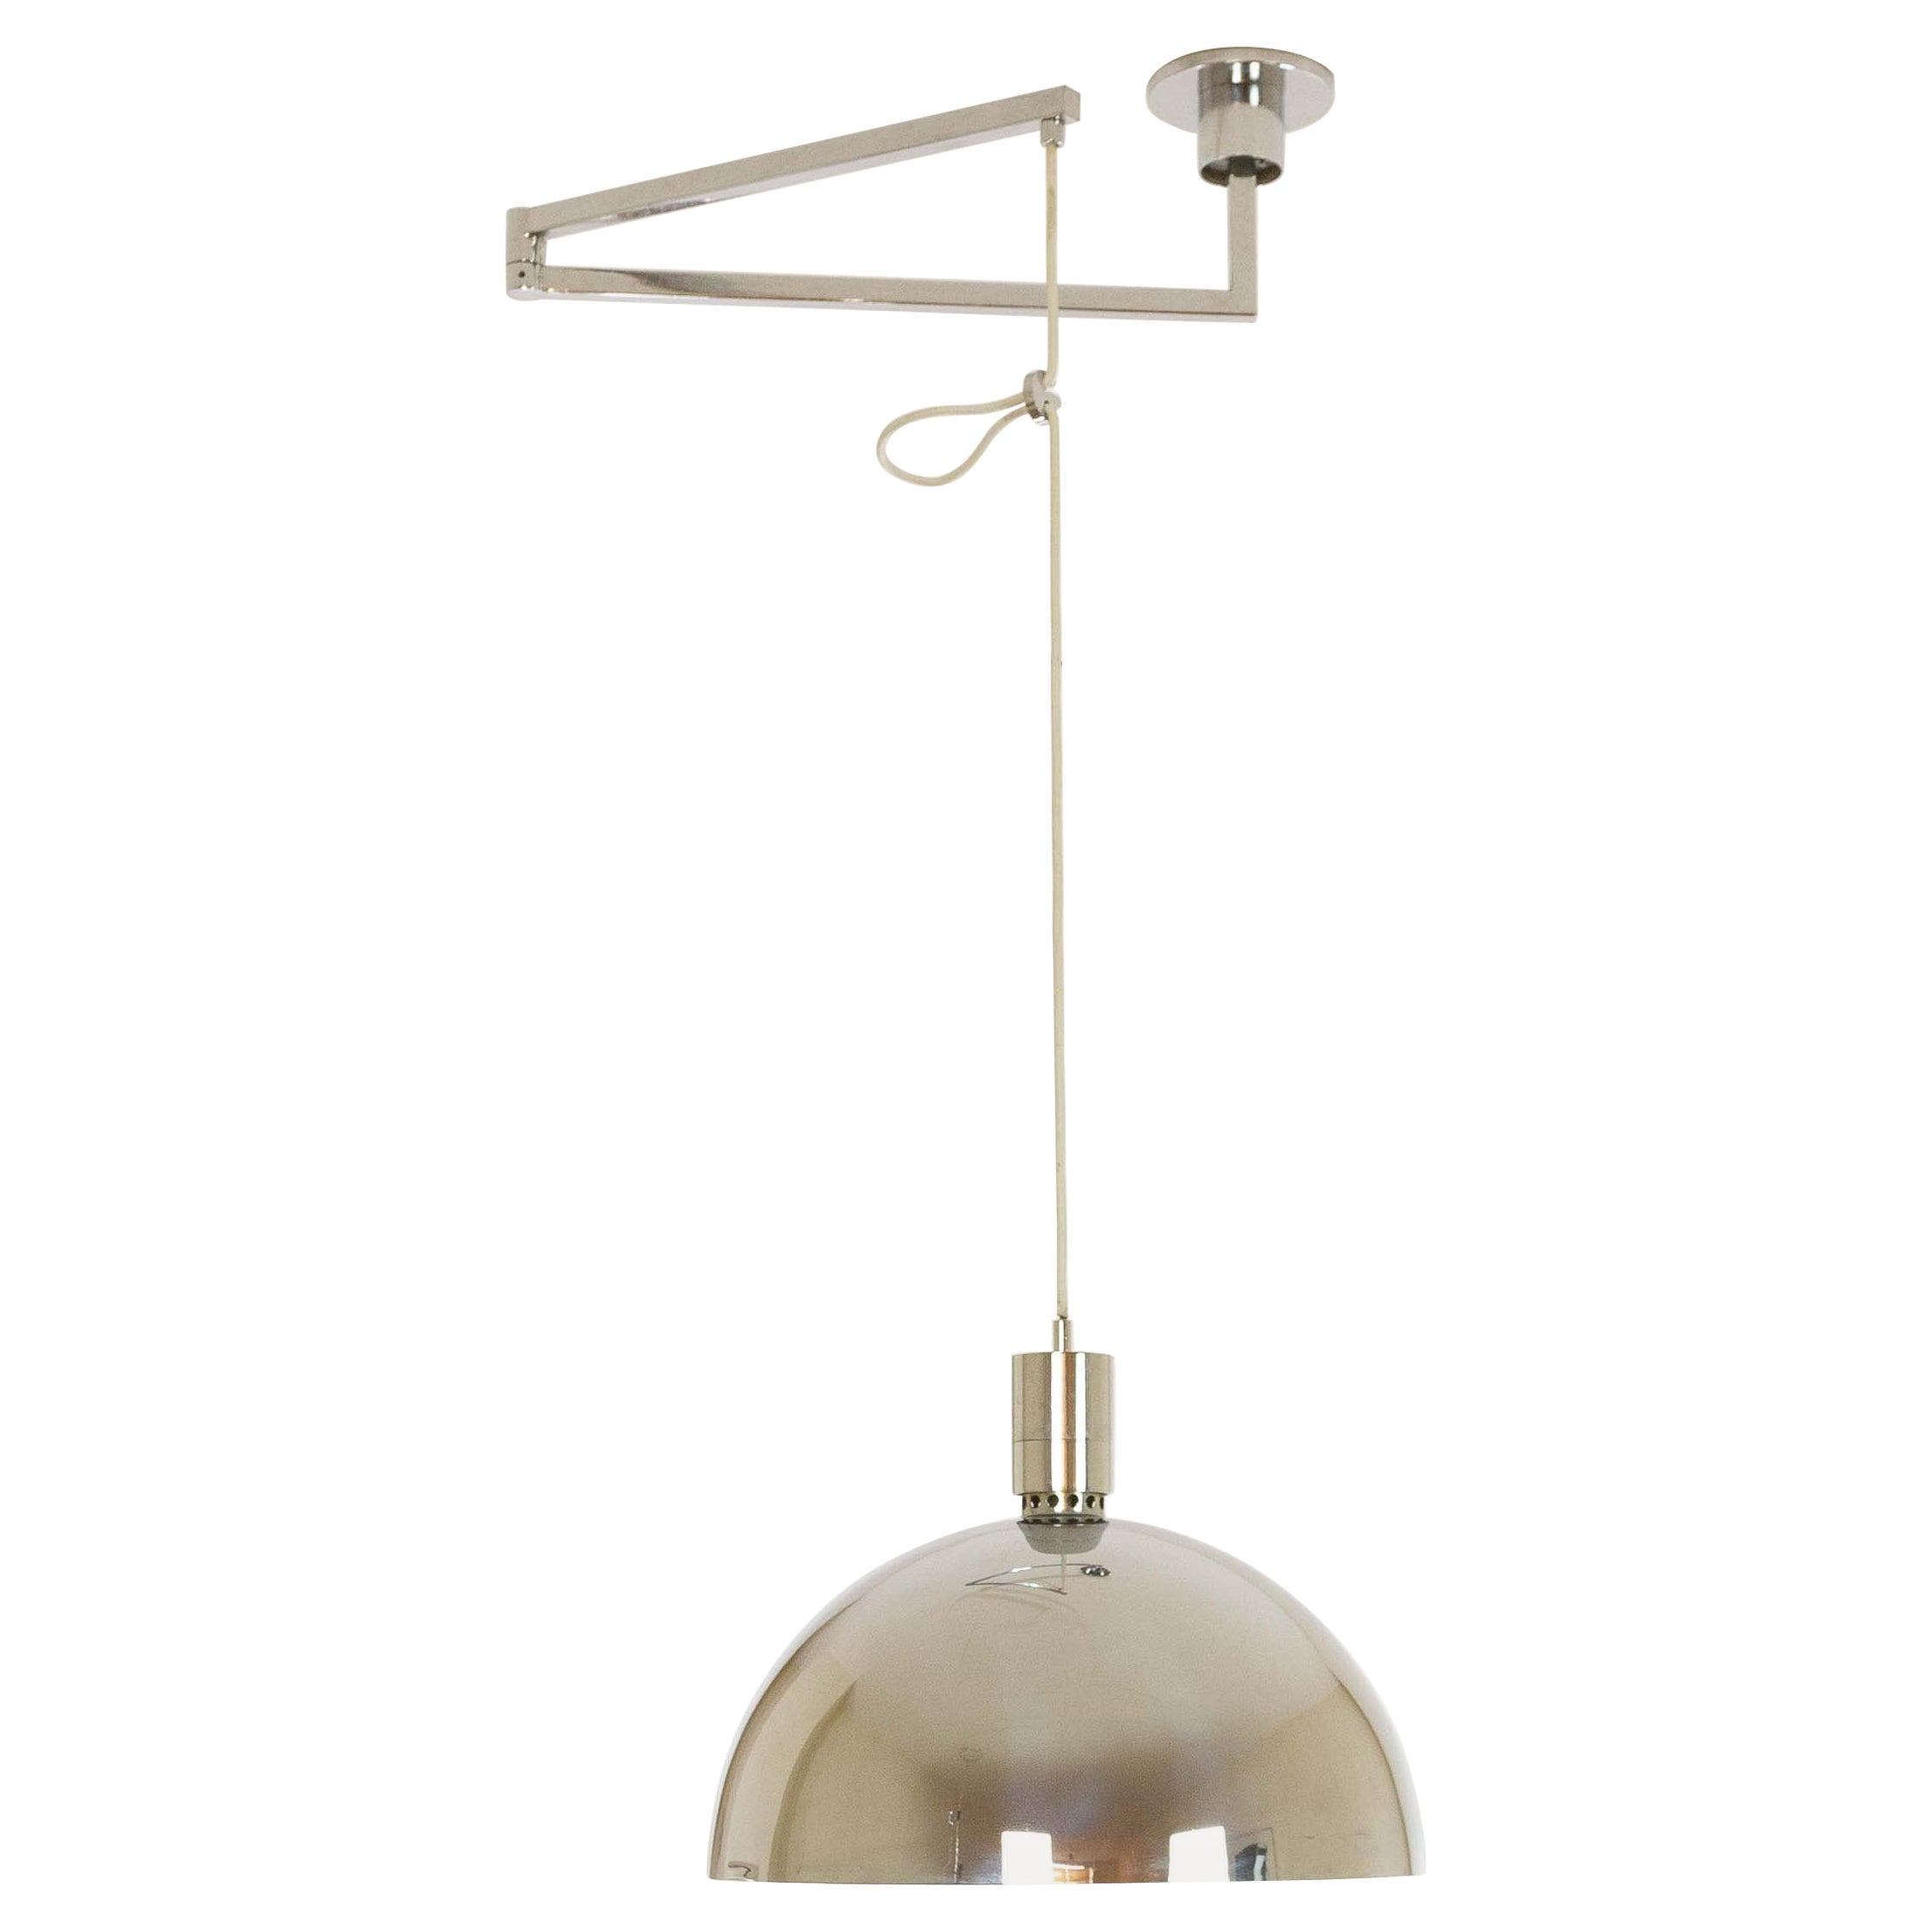 Ceiling Lamp AS41Z by Franco Albini, Franca Helg & Antonio Piva for Sirrah, 1970